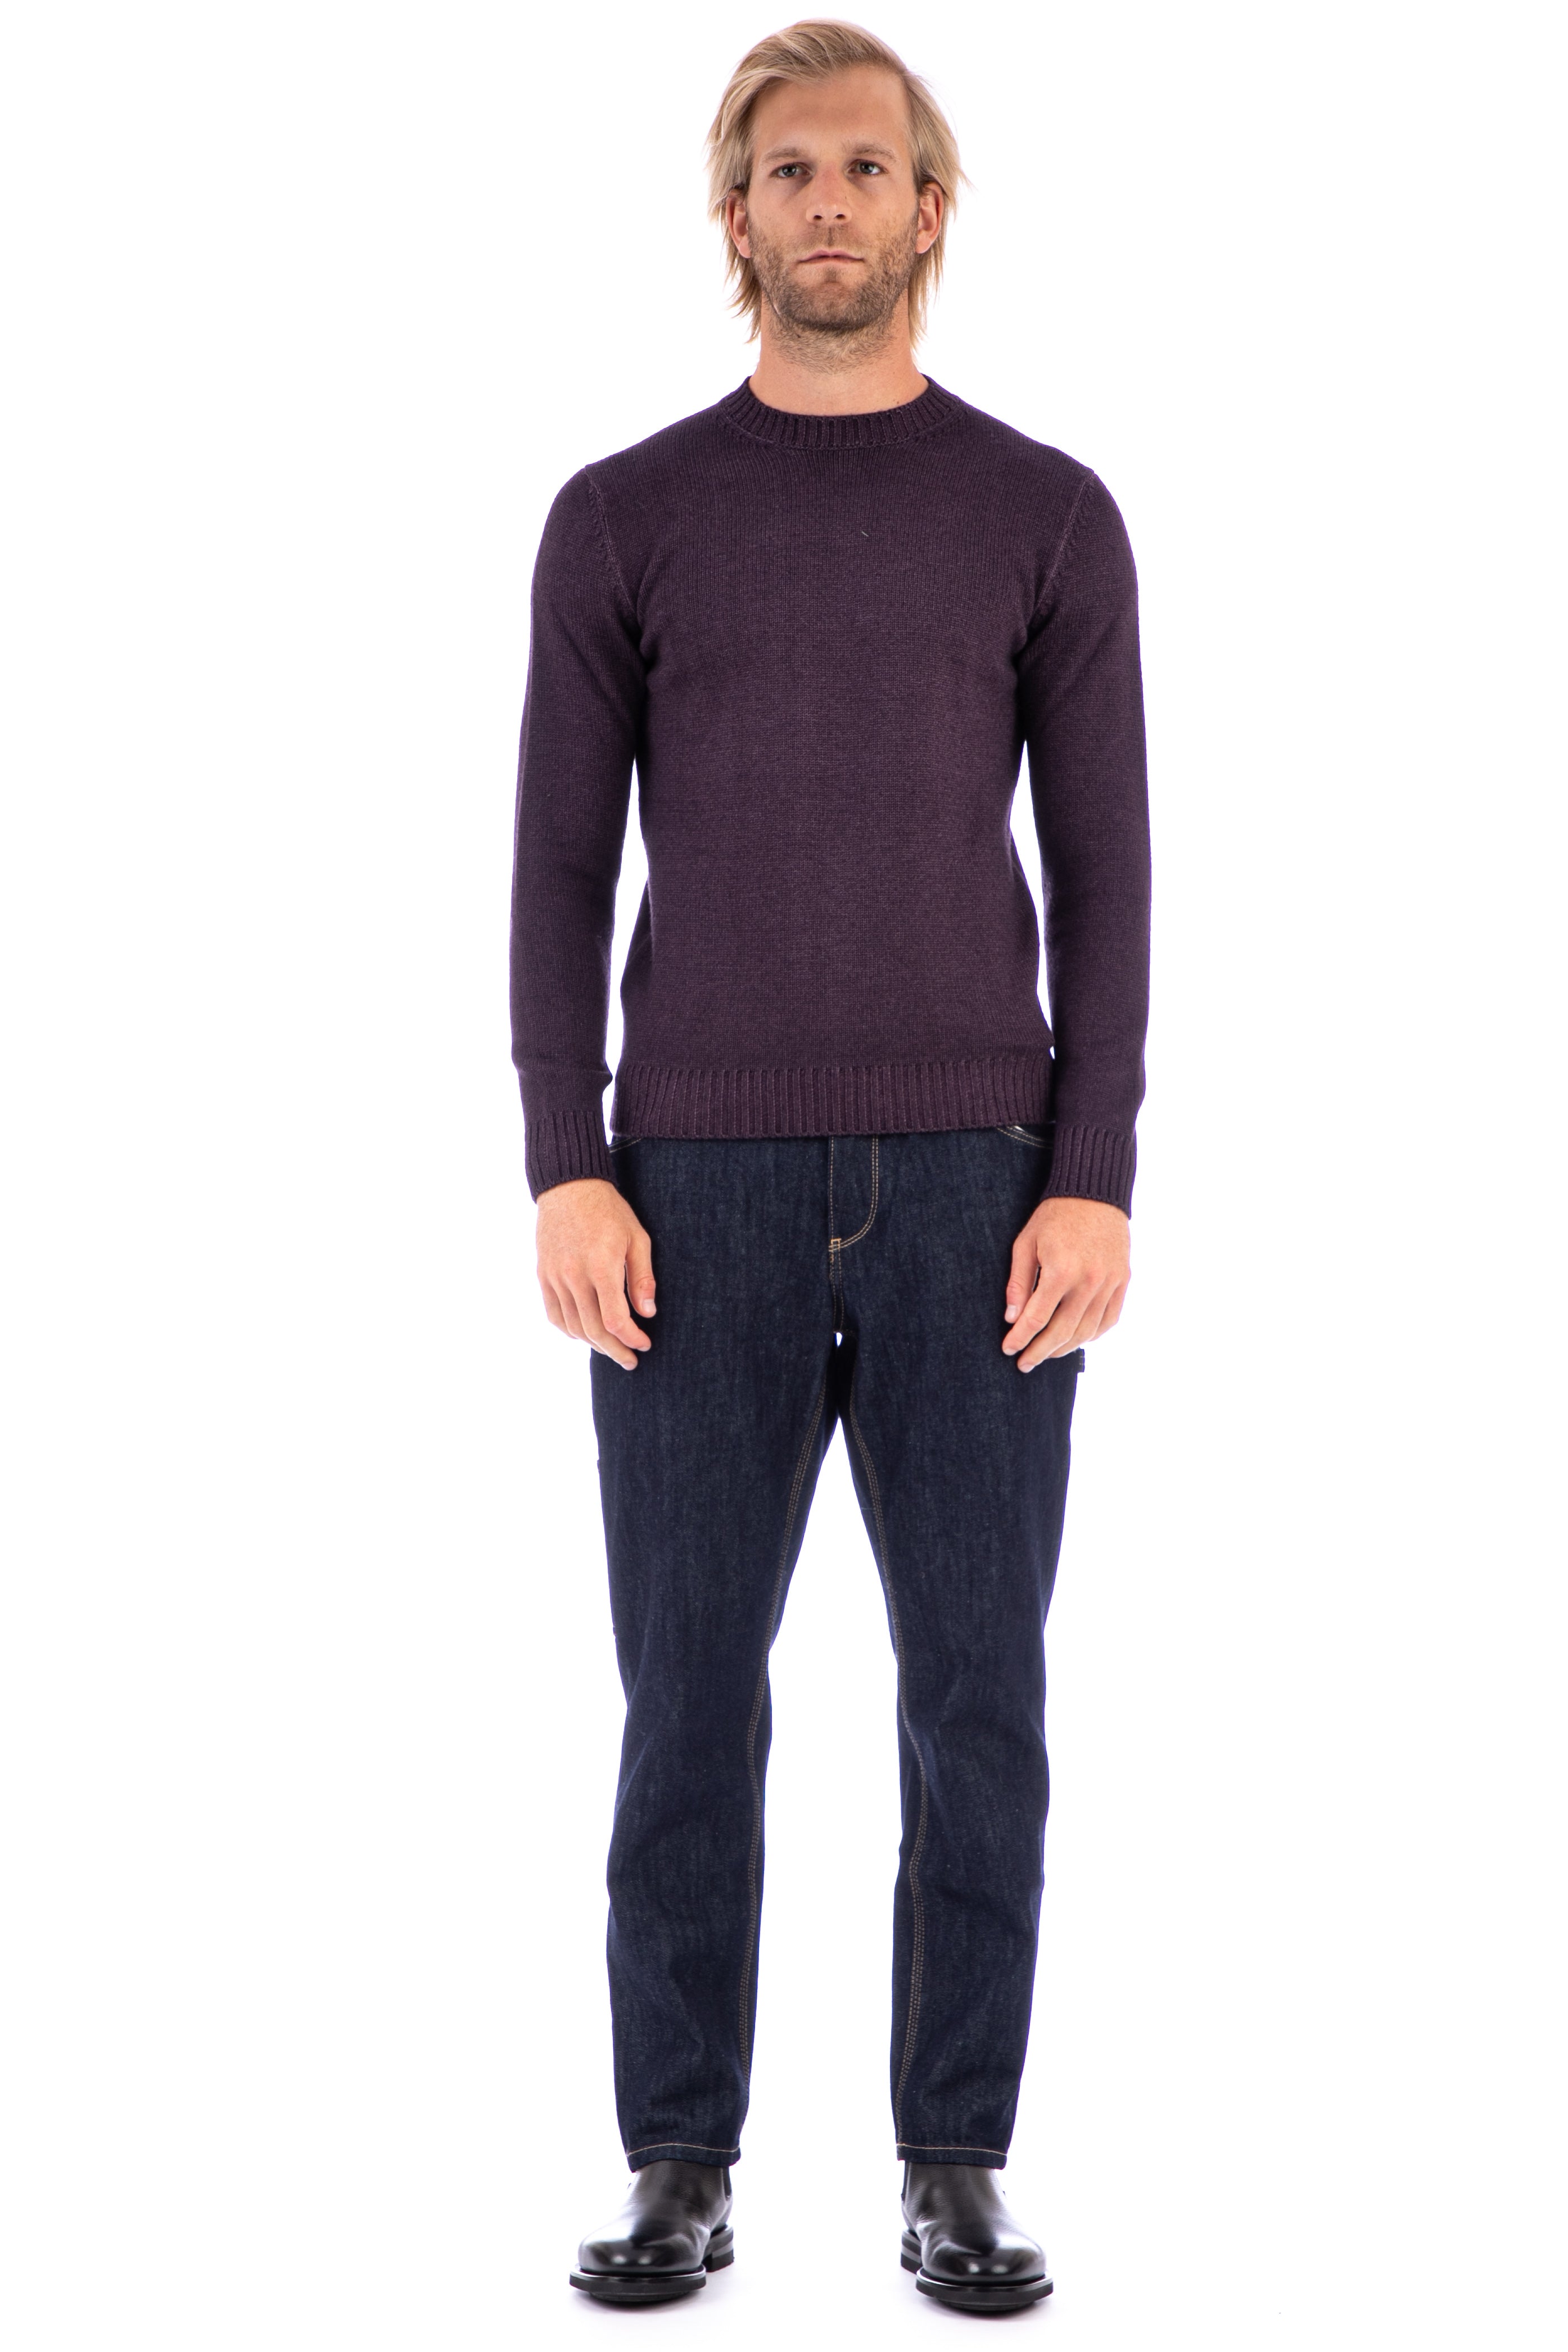 Crew-neck sweater in faded wool